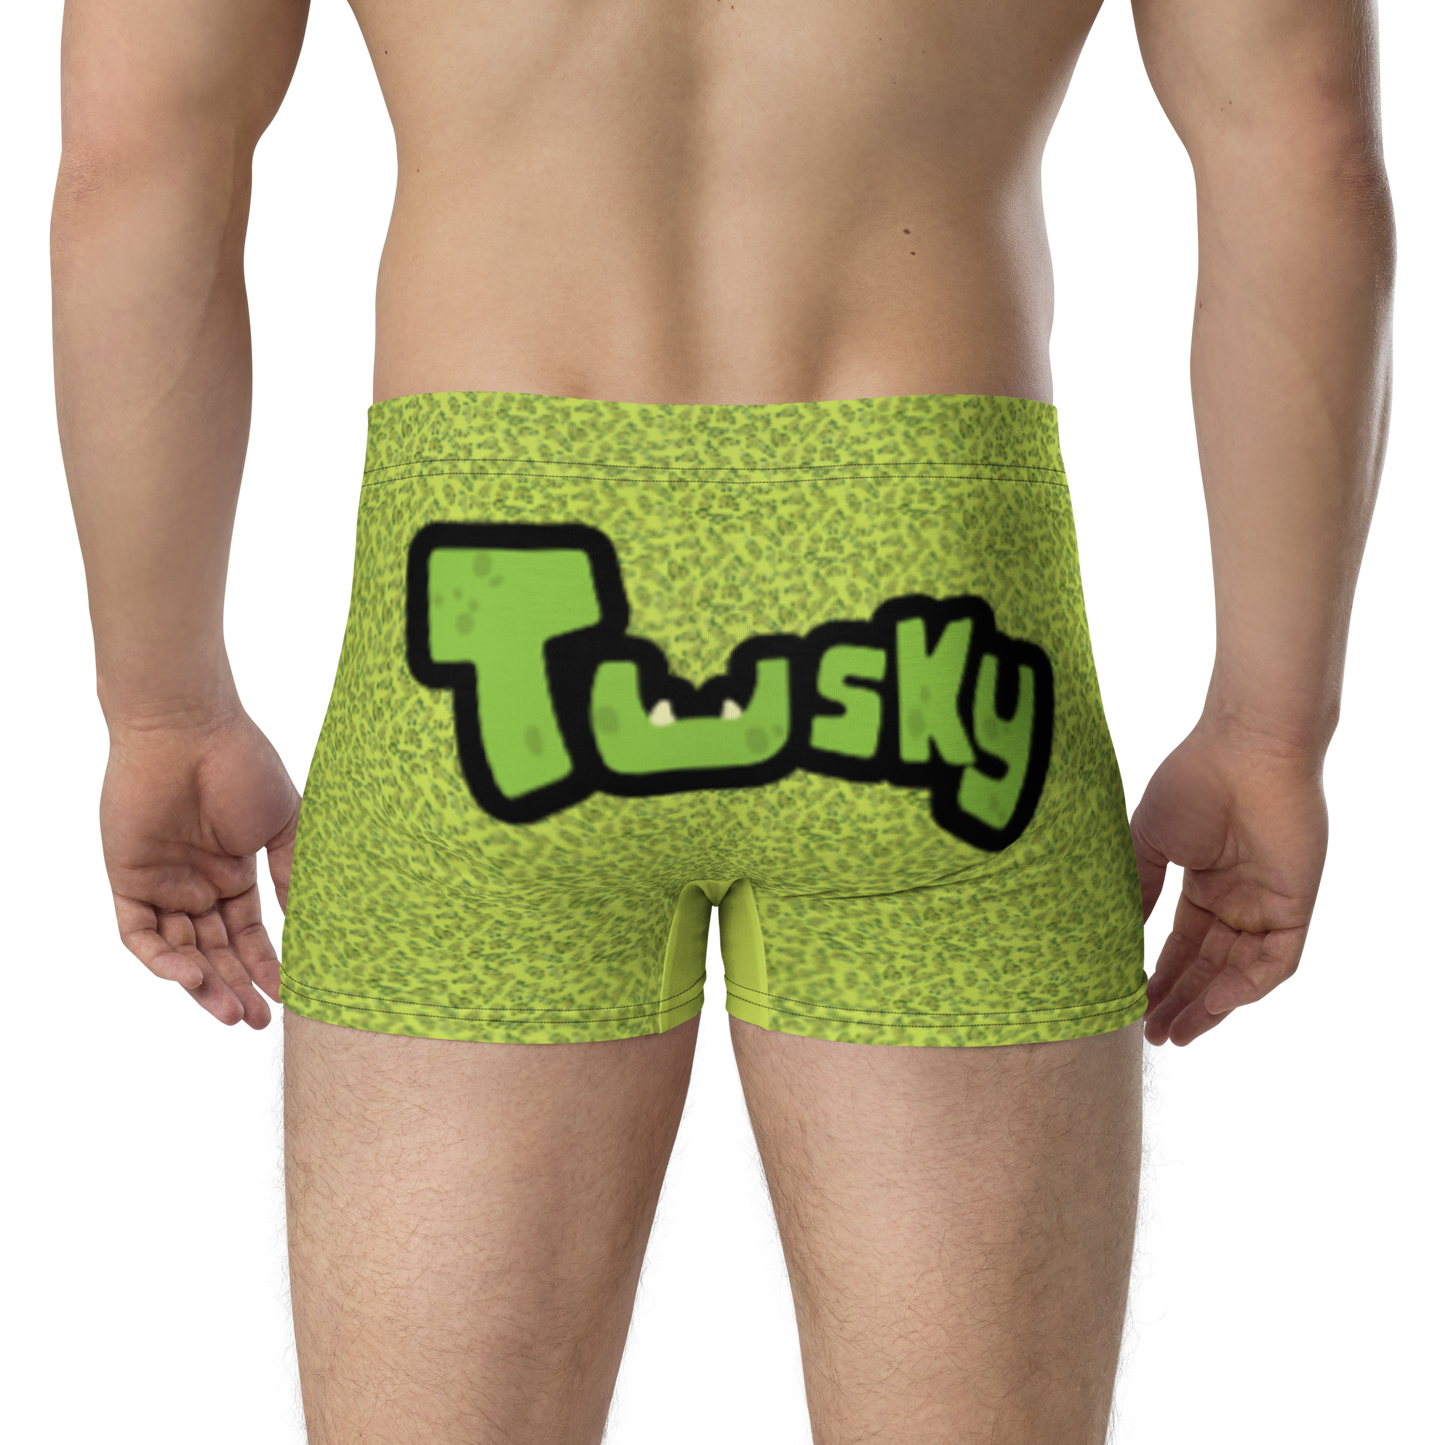 Tusky Boxer Briefs